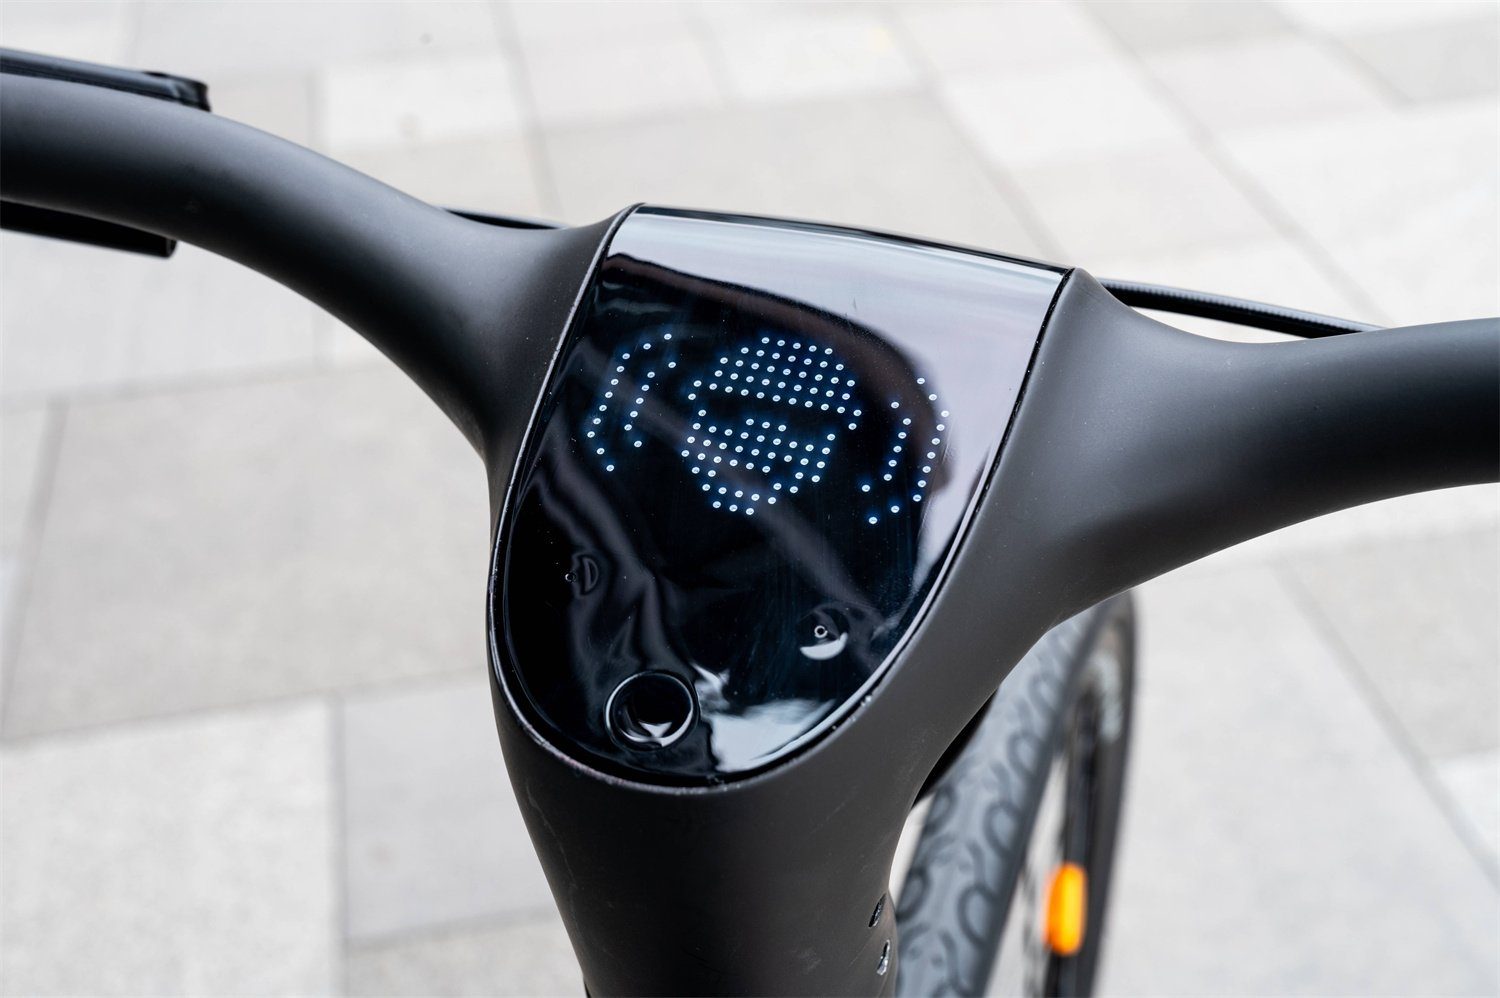 Urtopia E-Bike 1 (Set, Mit Motoren, Orange 360Wh,Mit Heckmontierte City Wifi,Bluetooth,LED-Matrixdisplay,Touch-Interaktion,GPS,OTA One Gang, Carbon Batterieladege), e-bike